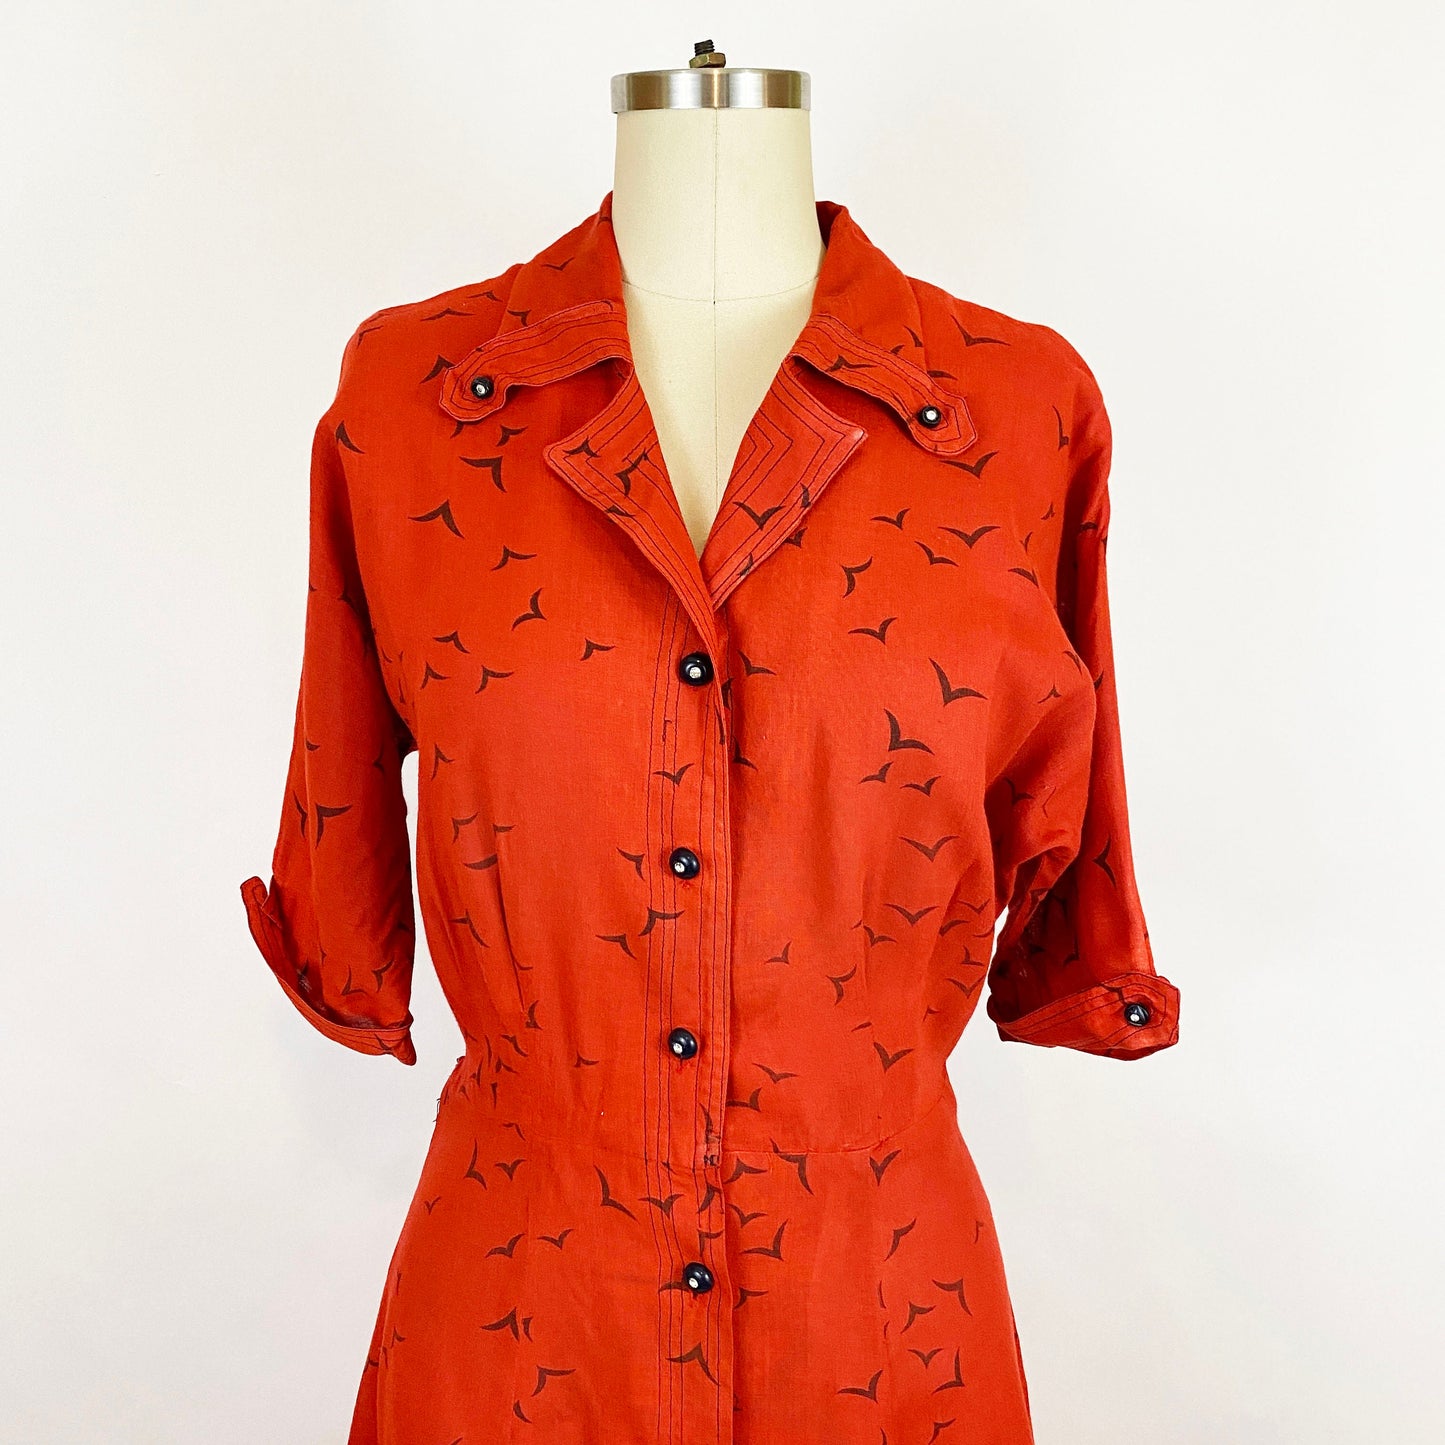 1940's Barbette Bird Print Cotton A-line Shirtdress Red Black Retro Novelty Print 40s 50s Pin Up Rockabilly Spooky Goth Vintage / Medium